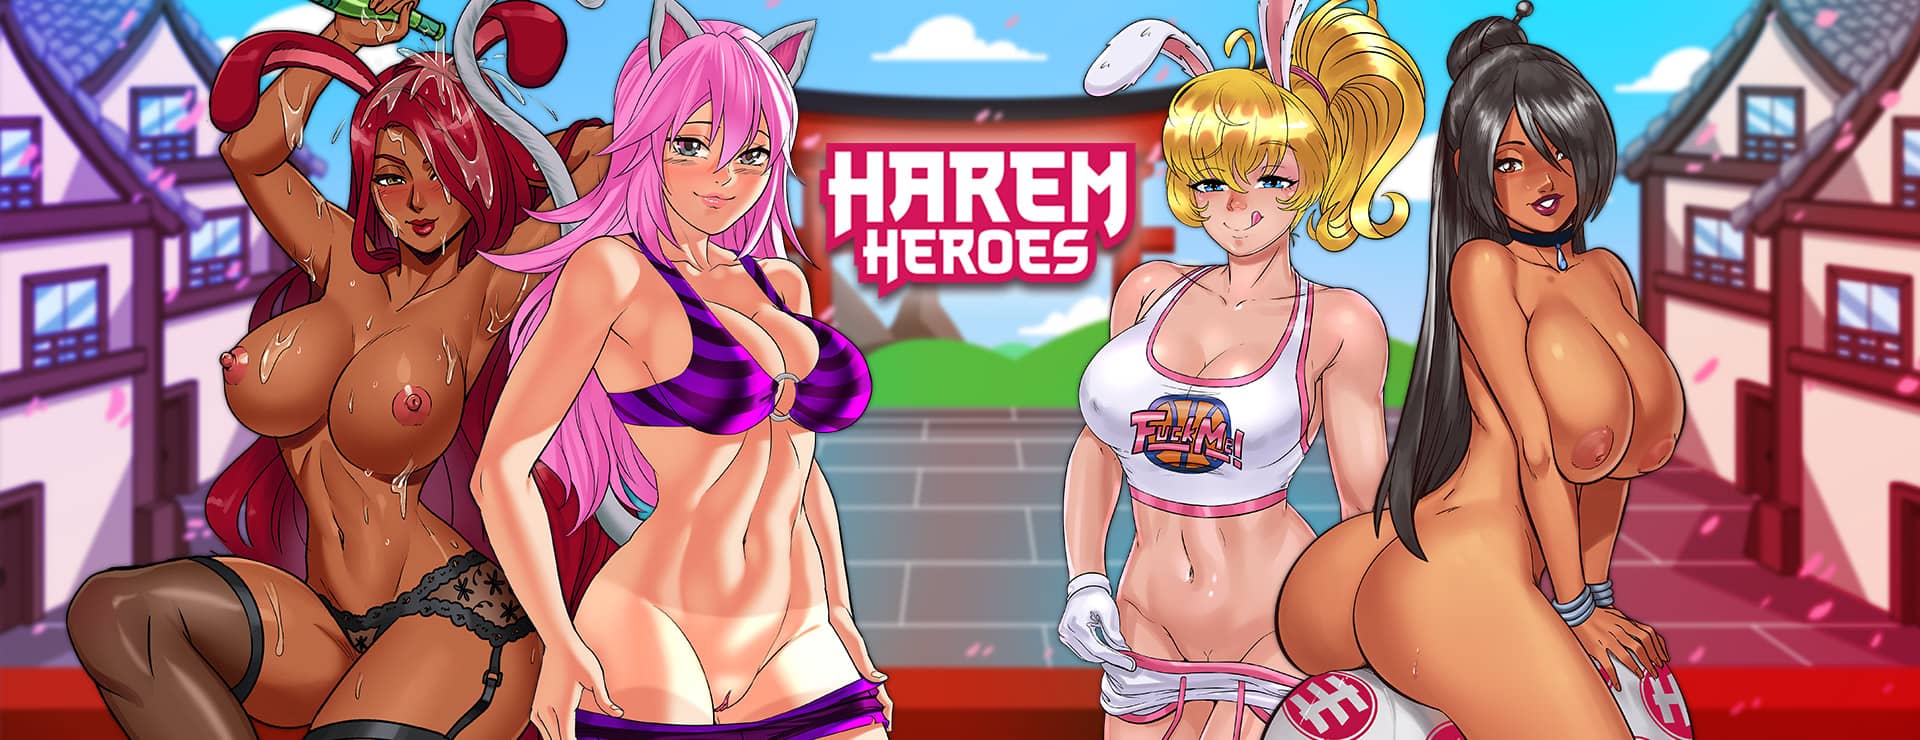 Harem Heroes - アクションアドベンチャー ゲーム